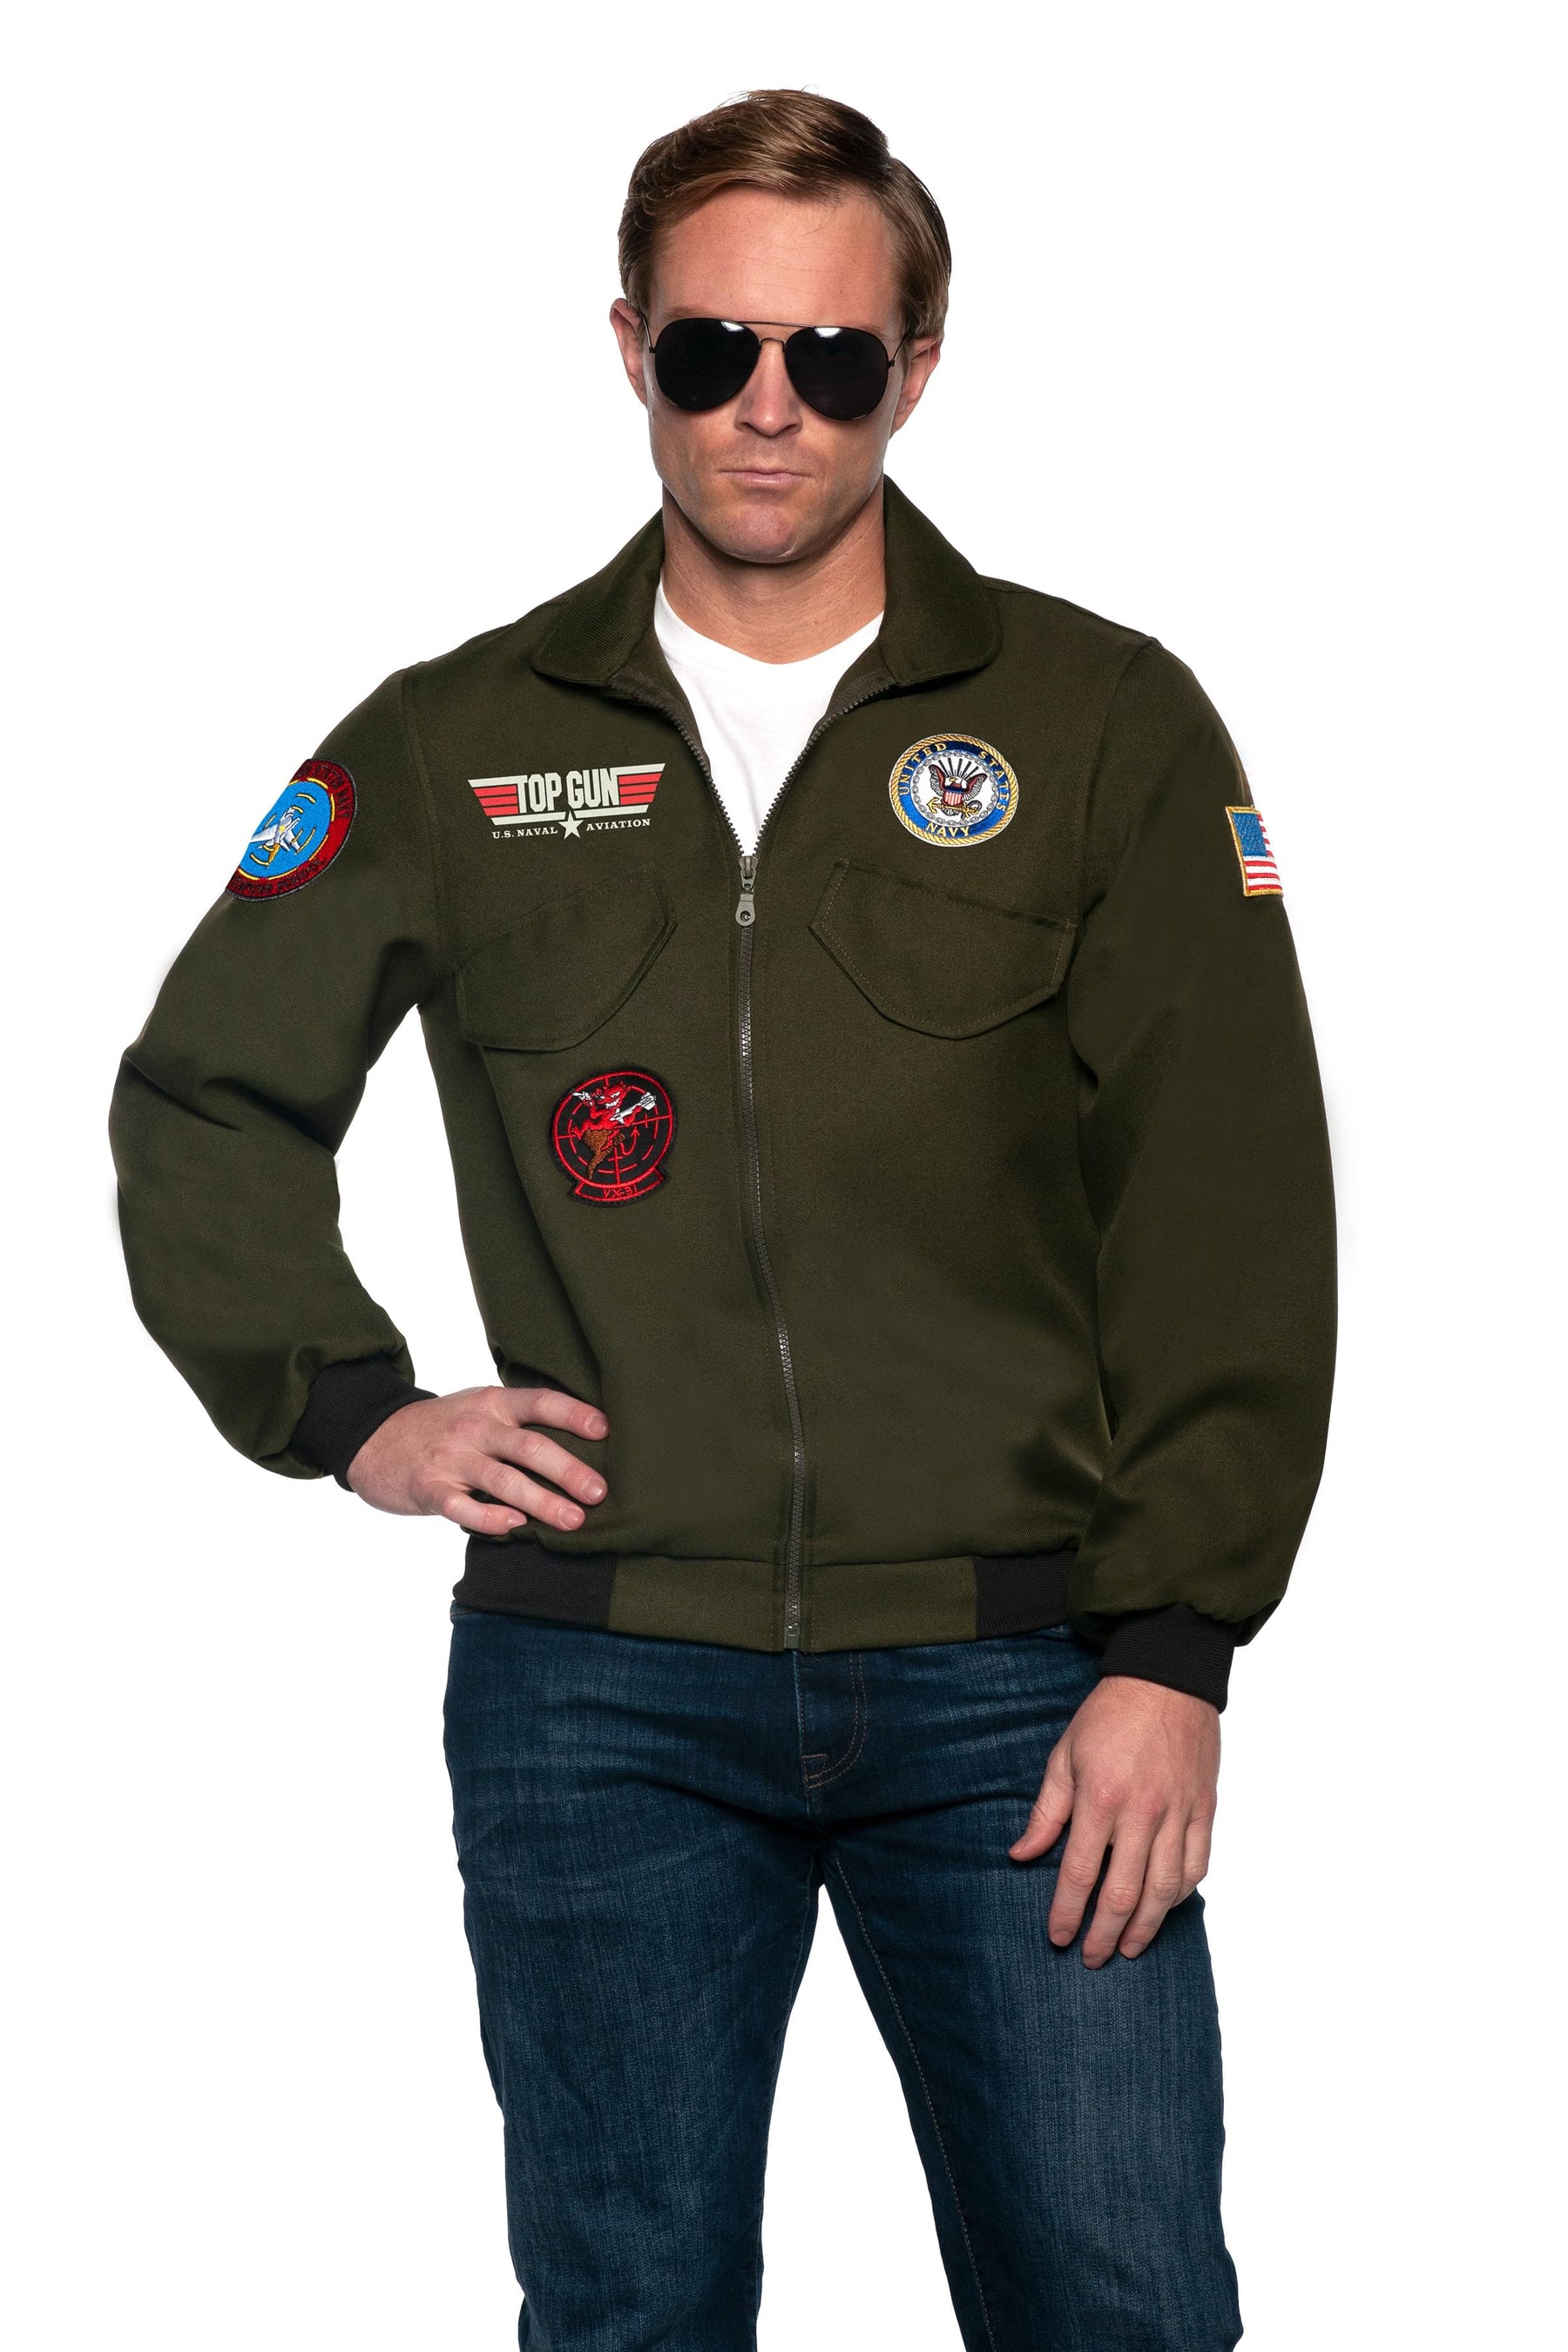 Navy Top Gun Pilot Jacket Adult Costume